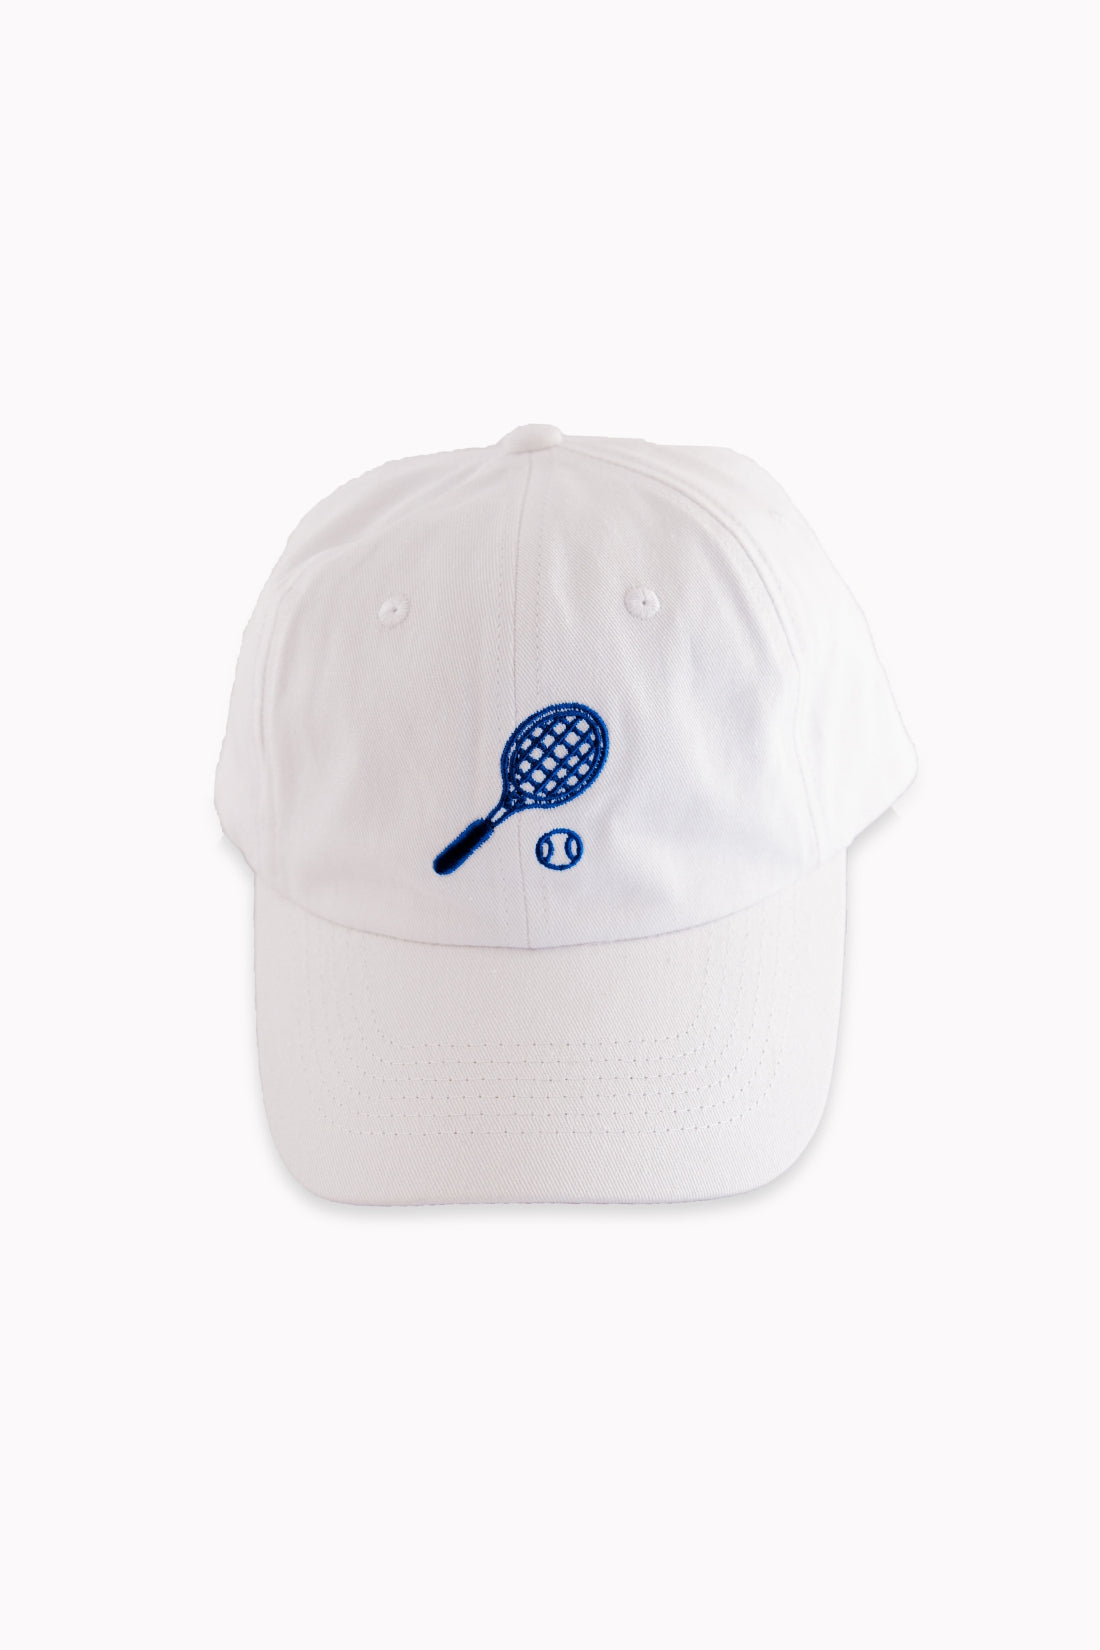 Tennis Pro Cap | White/Blue